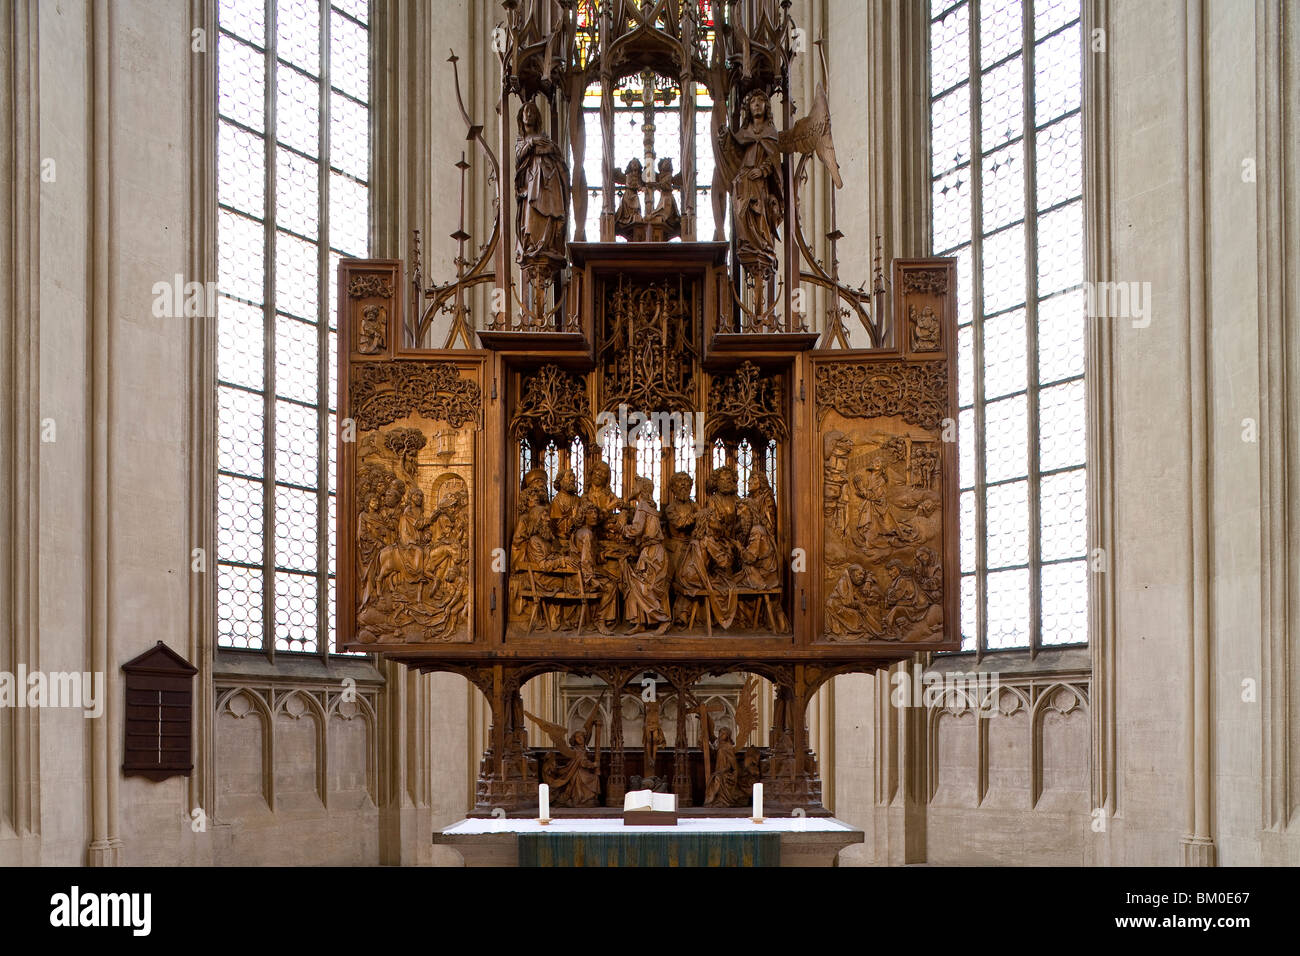 Sangue sacro altare da scultori Tilman Riemenschneider in St. Jakob la chiesa a Rothenburg ob der Tauber, Baviera, Tedesco Foto Stock